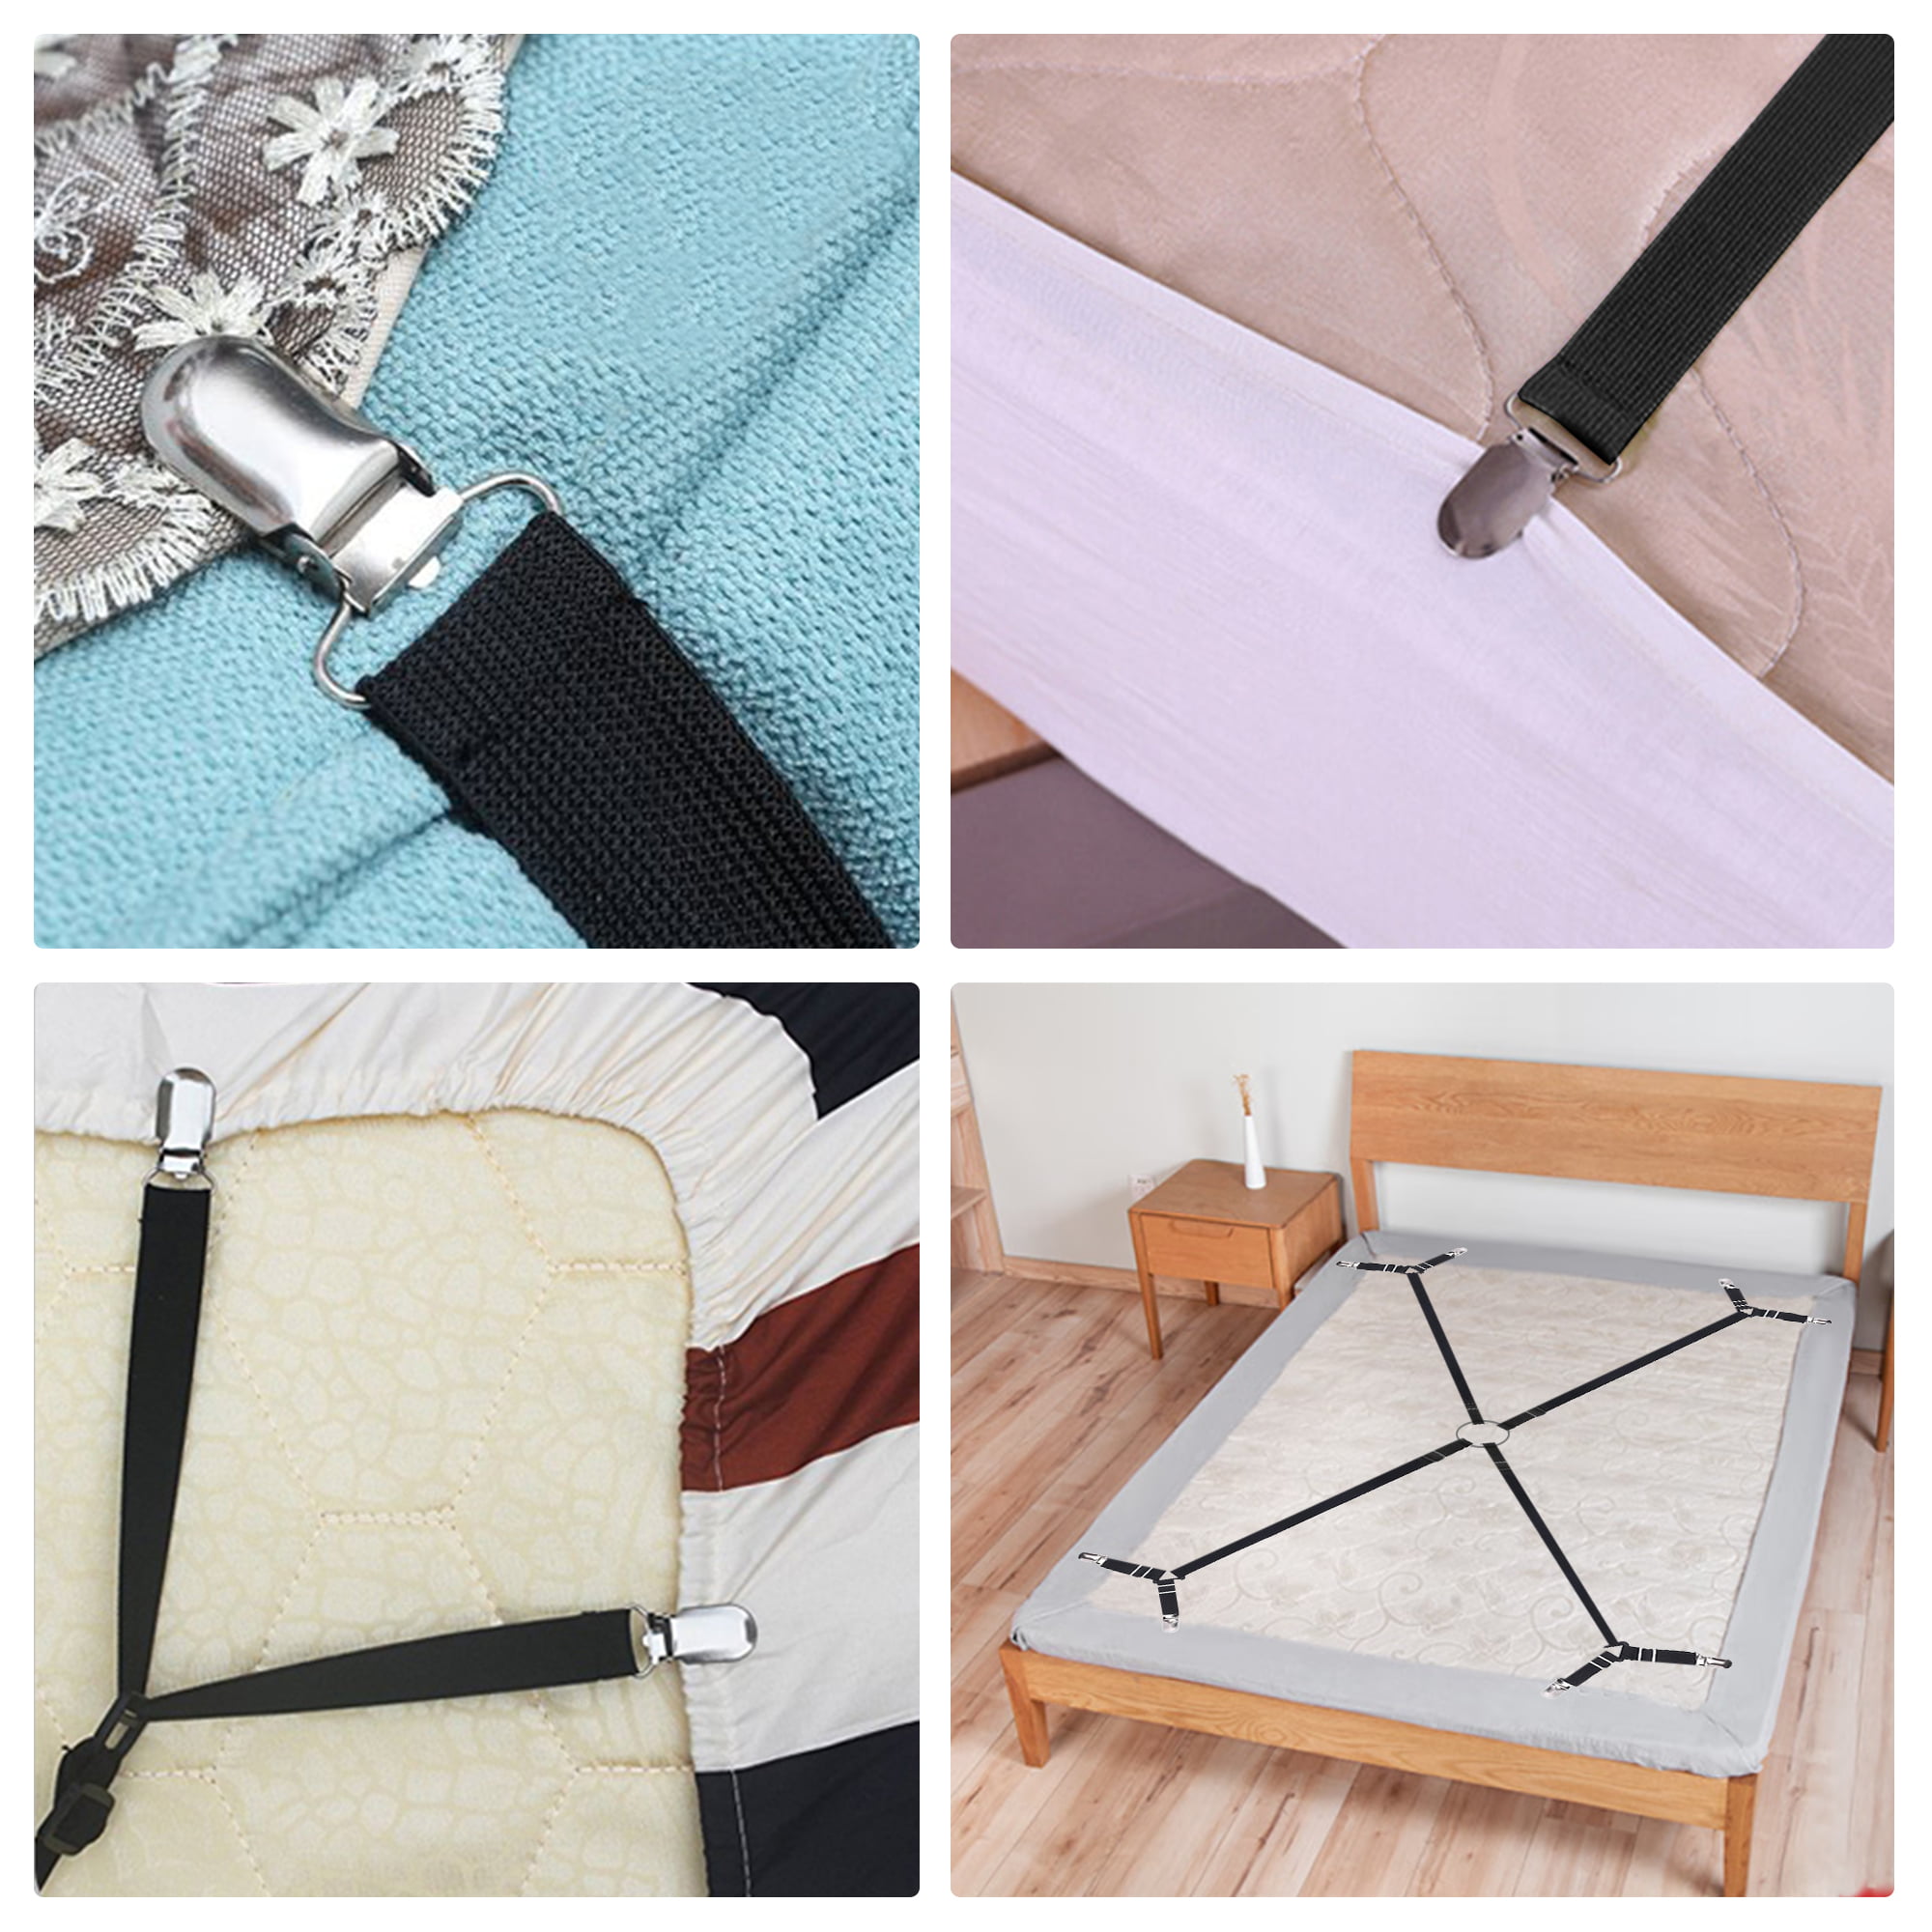 EEEkit 4Pcs Bed Sheet Straps, Triangle Non-Slip Mattress Cover Clips  Fastener, Adjustable Suspender Grippers (Black)